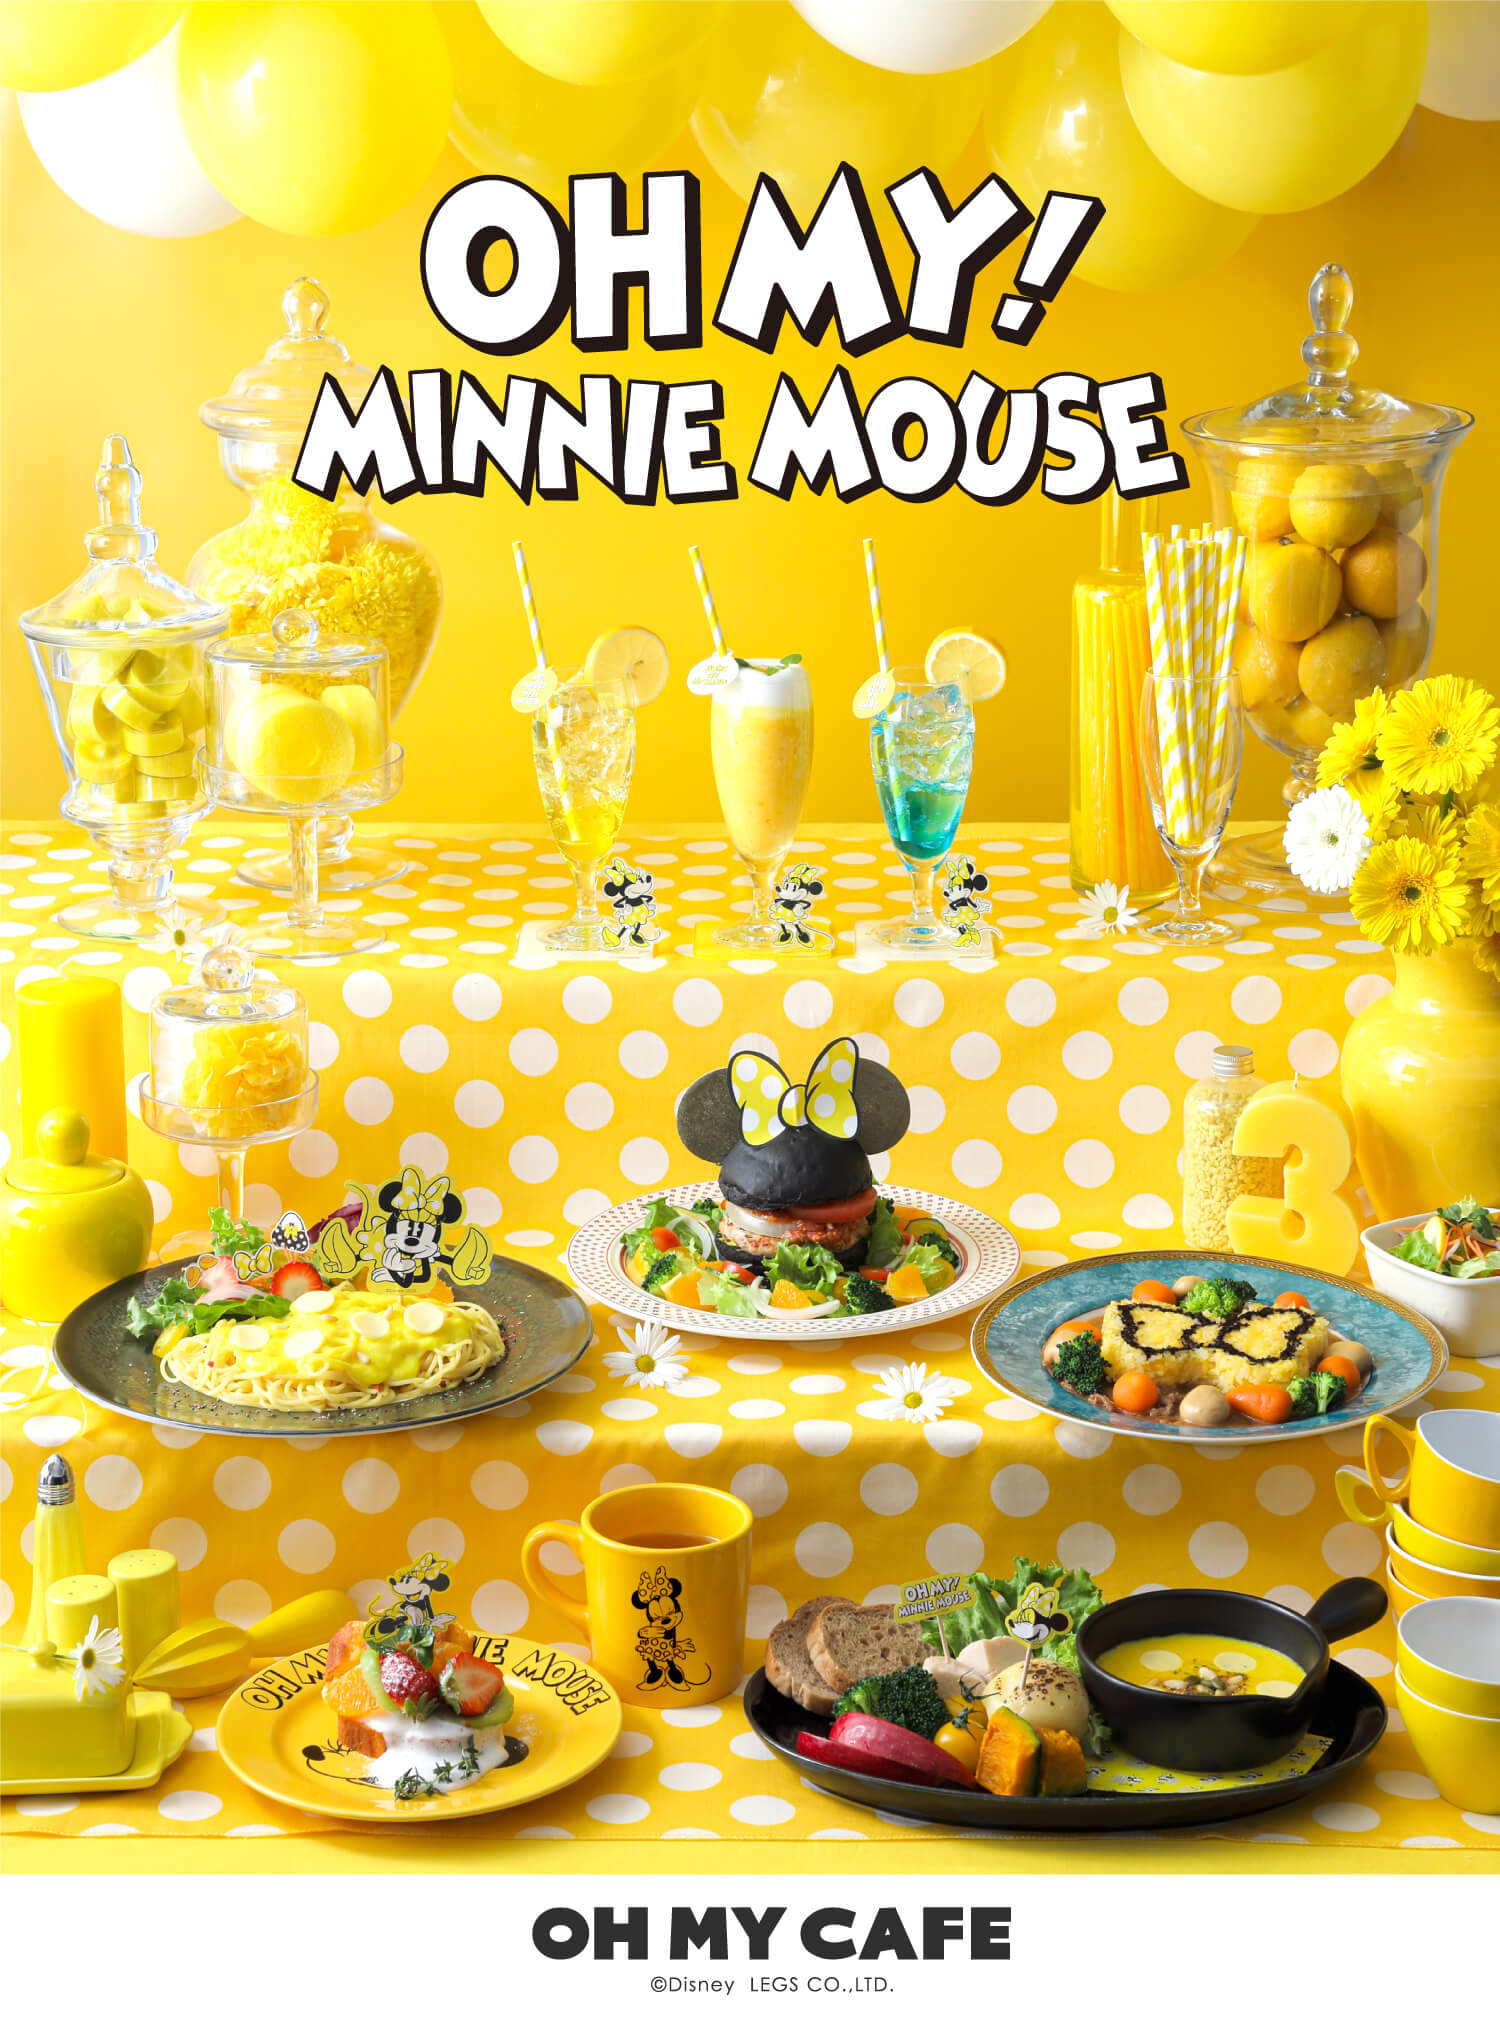 Minnie Mouse Cafe ミニーマウスカフェ米妮老鼠咖啡店